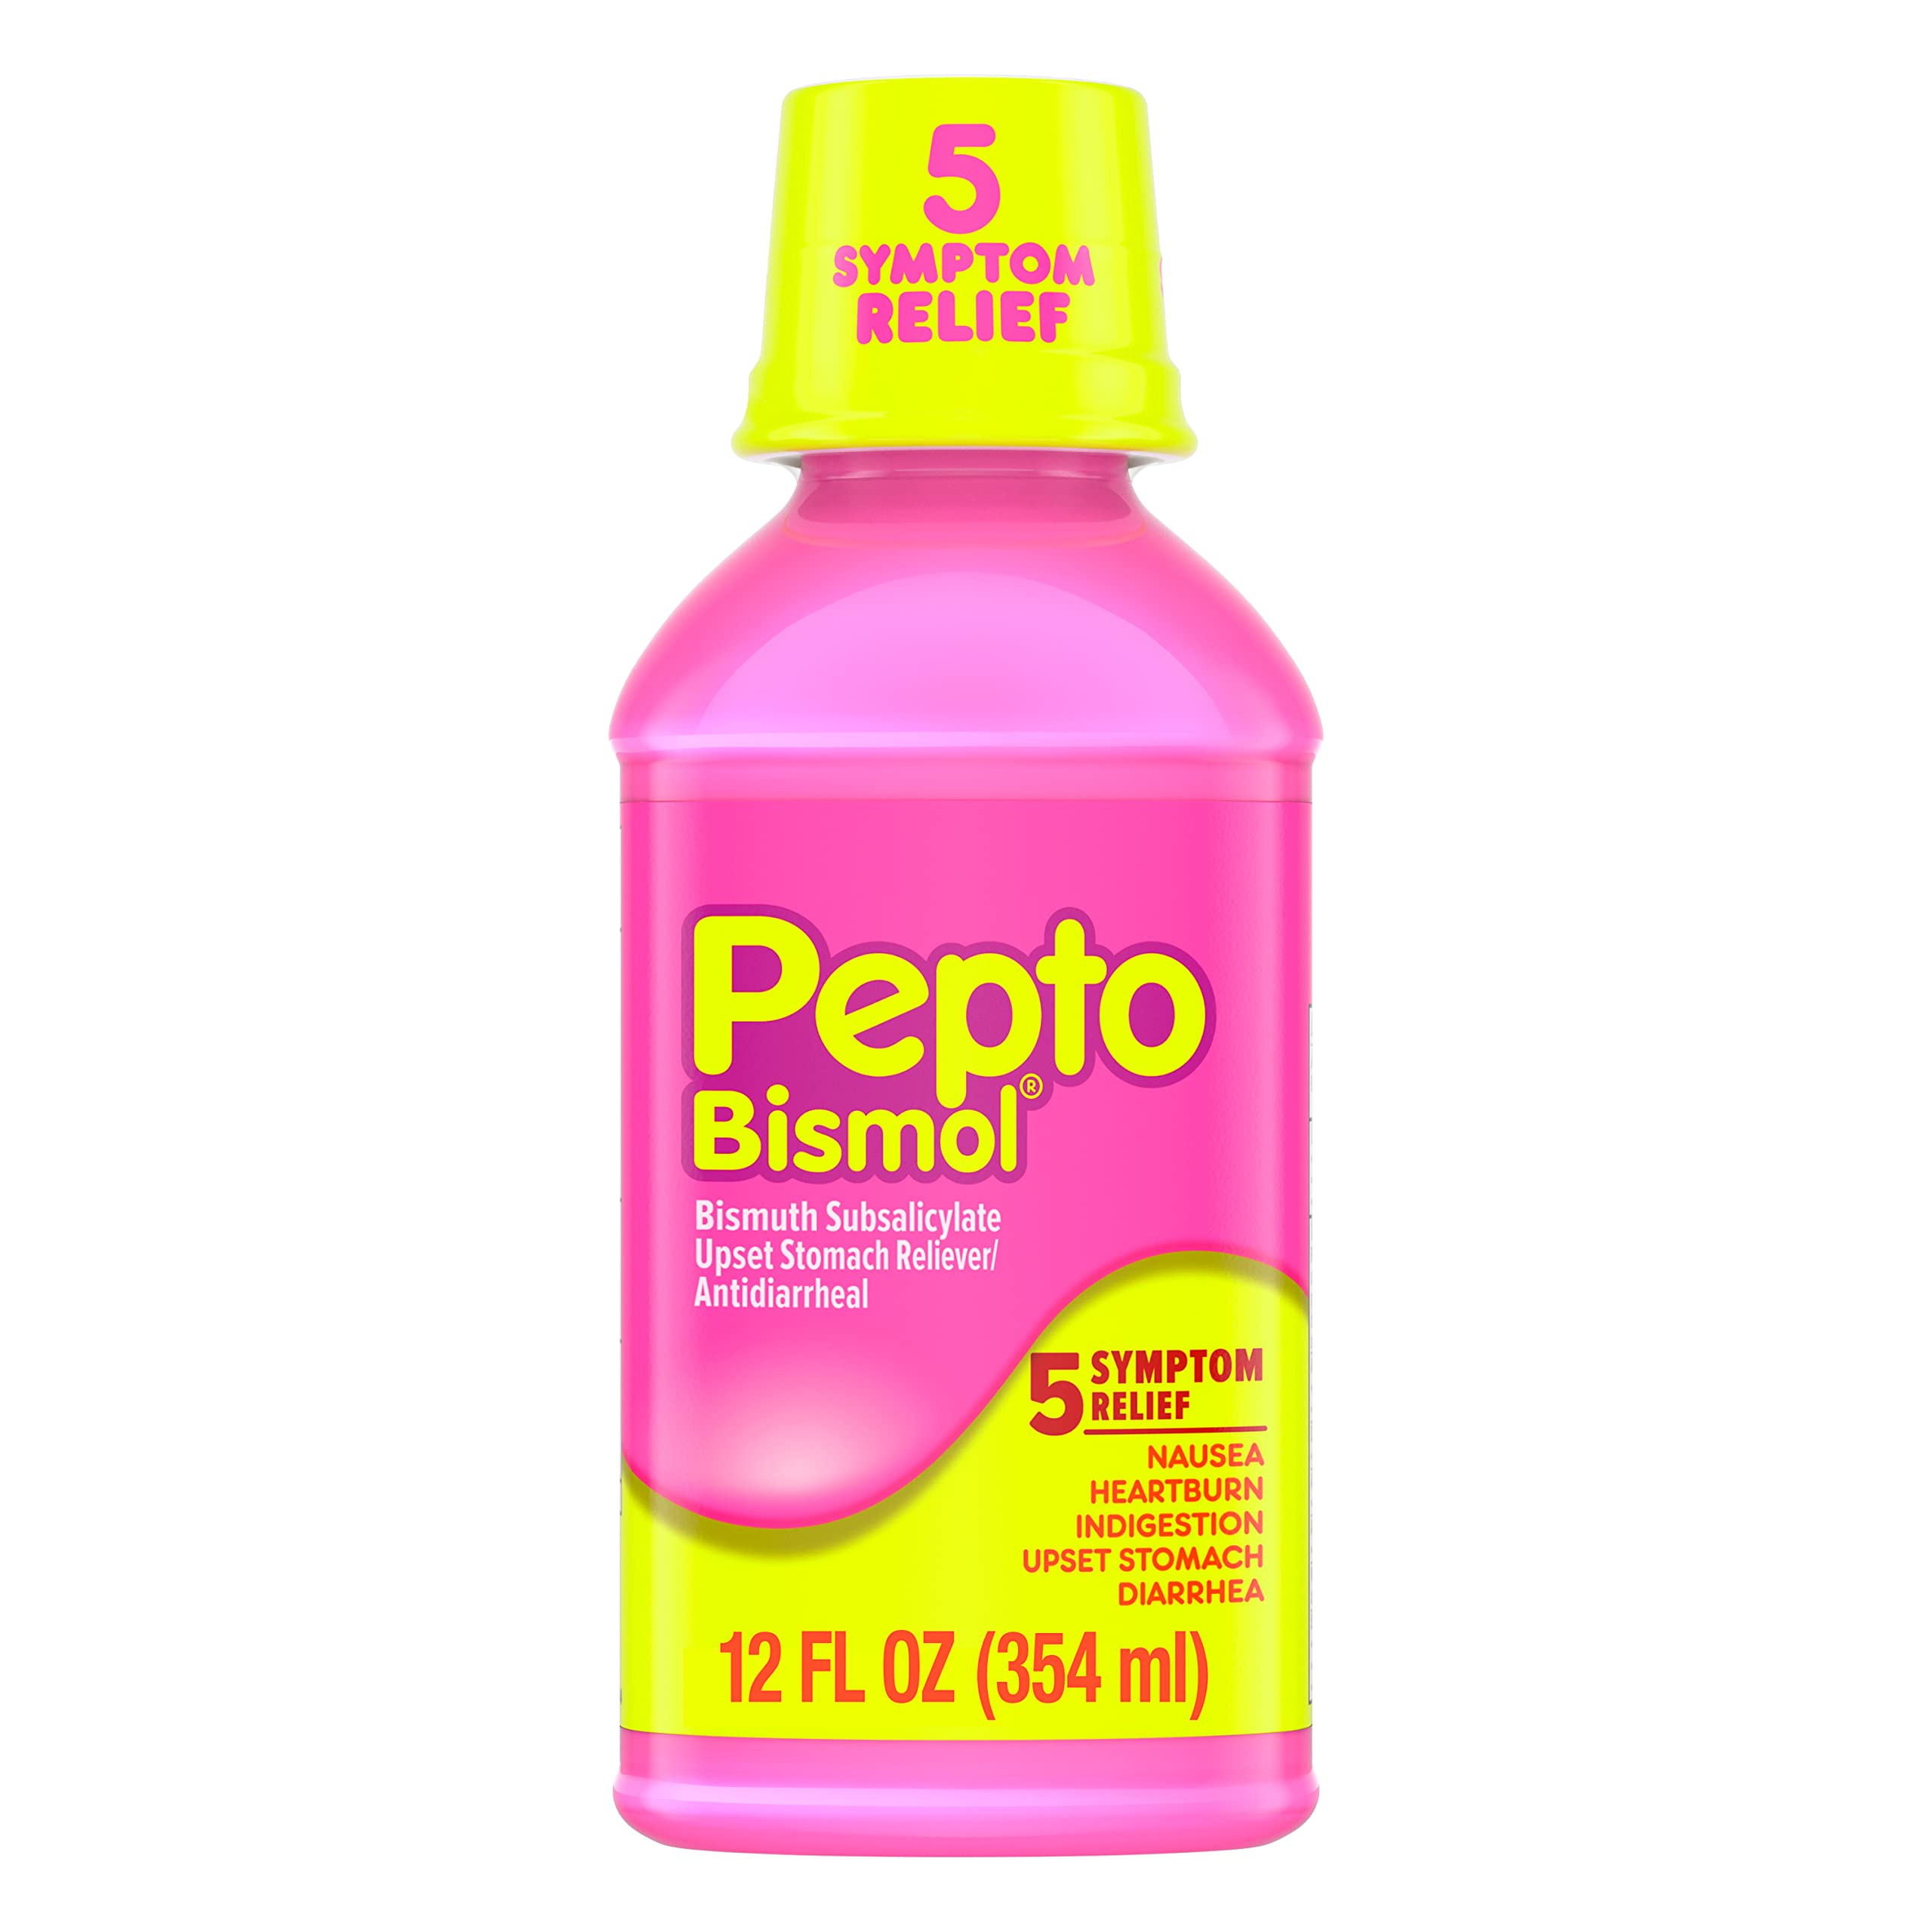 Pepto Bismol Liquid for Nausea, Heartburn, Indigestion, Upset Stomach, and Diarrhea Relief, Original Flavor 12 oz